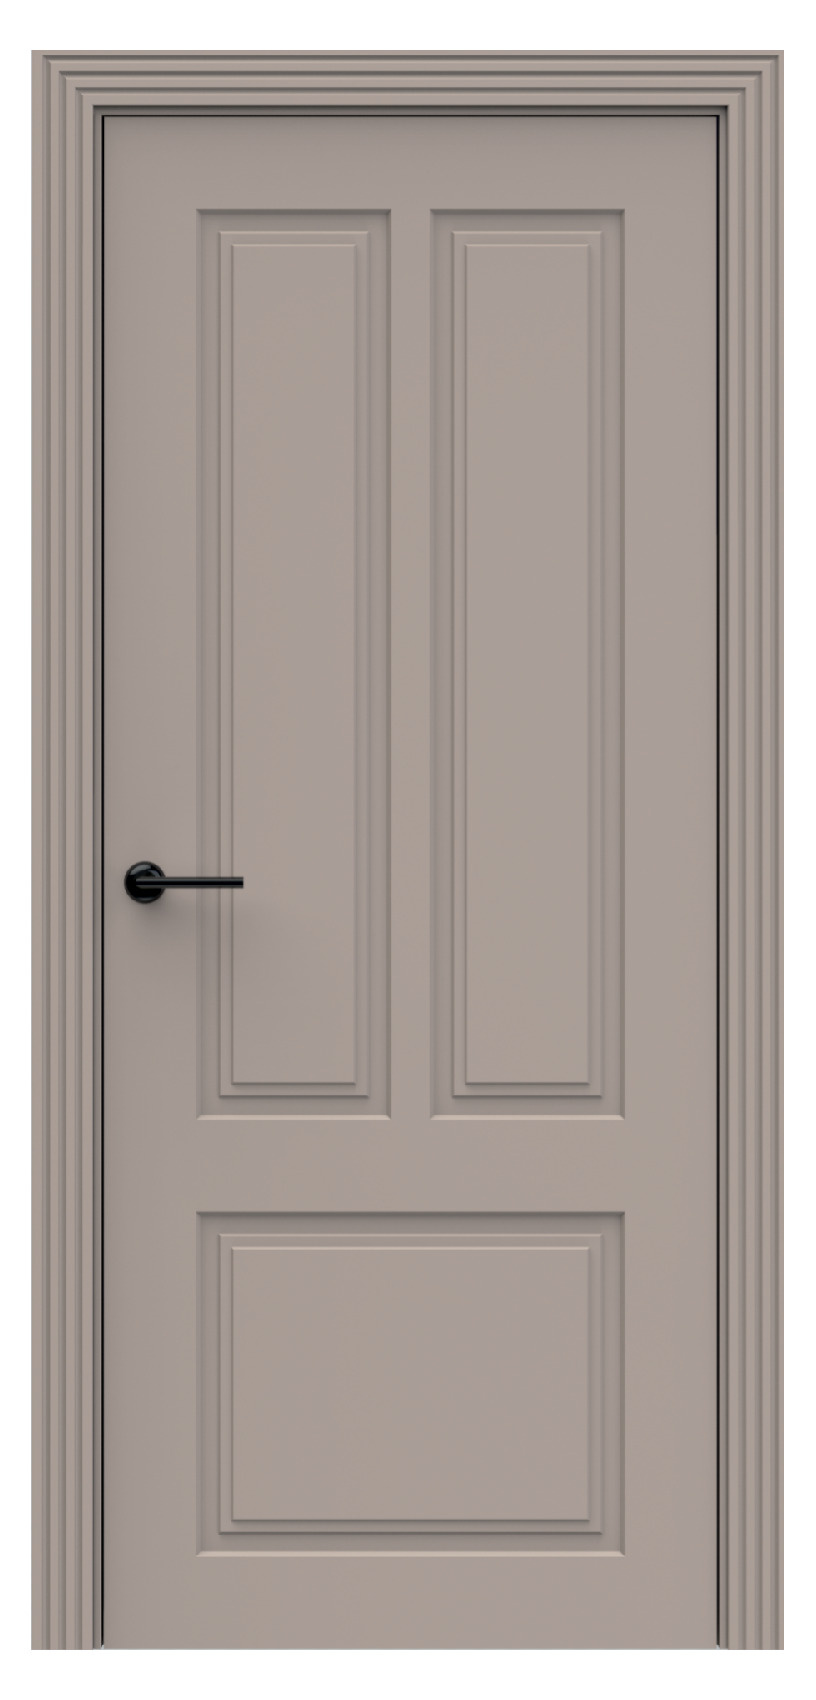 Questdoors Межкомнатная дверь QI17, арт. 17978 - фото №1